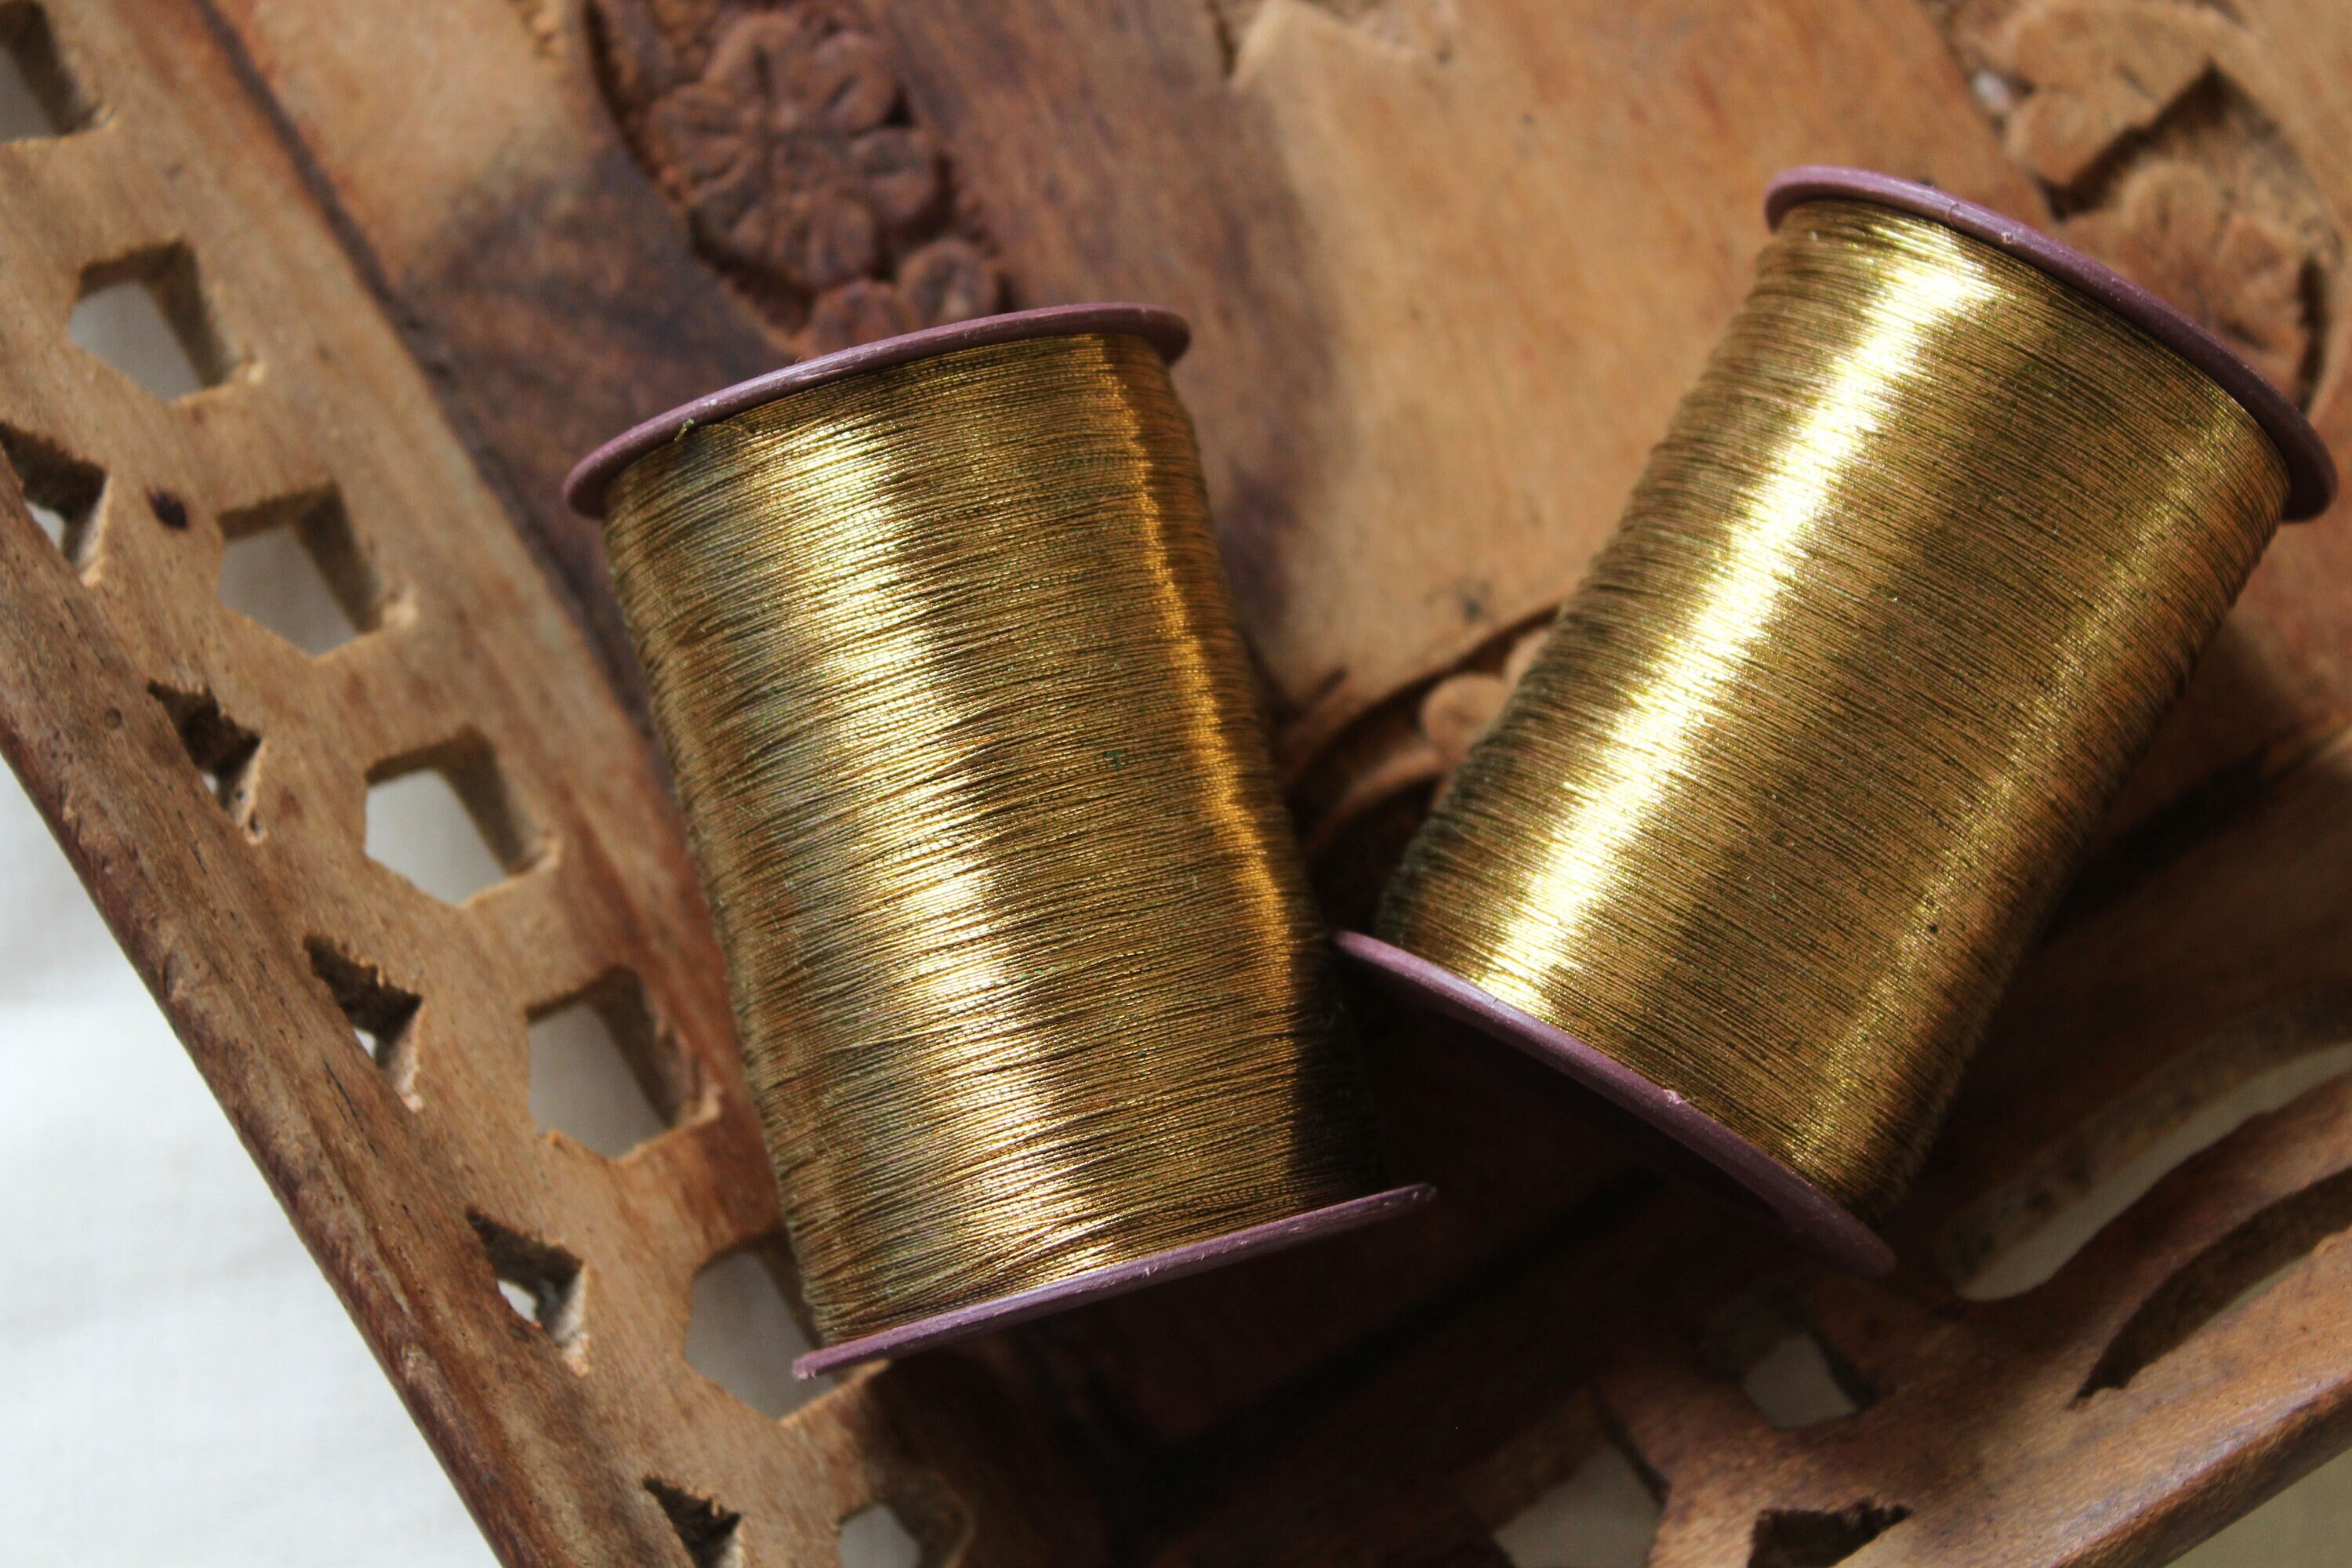 Antique Gold Zari Metallic Thread-hand Machine Embroidery metallic Sewing  Thread-zardozi-luneville Embroidery-tambour Embroidery-2 Rolls 